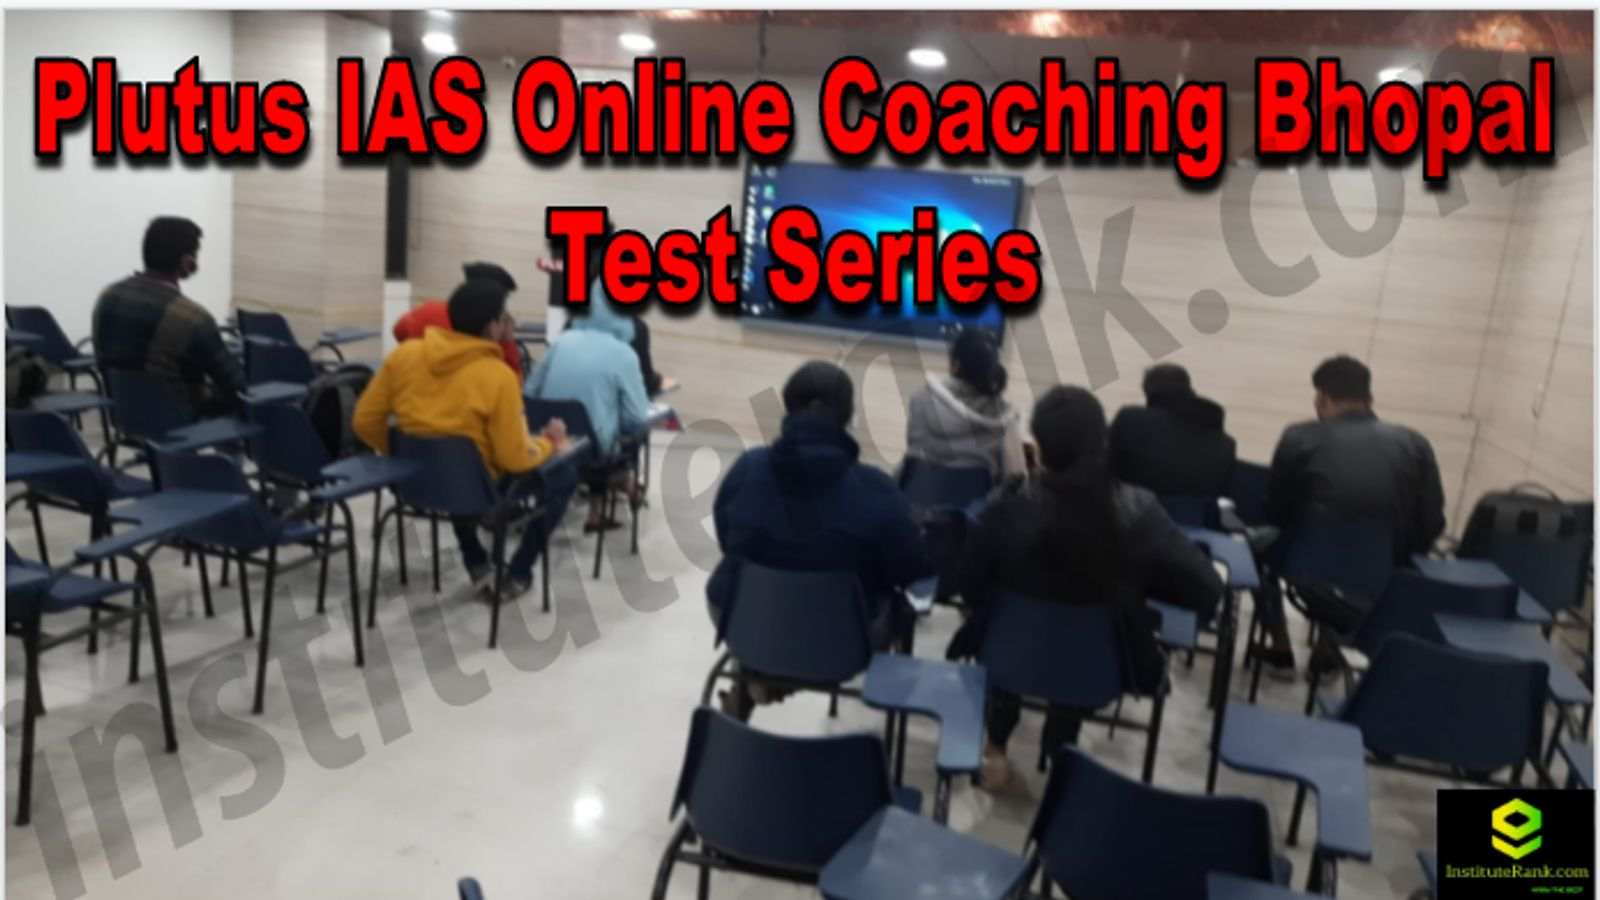 Plutus IAS Online Coaching Bhopal Reviews Test Series